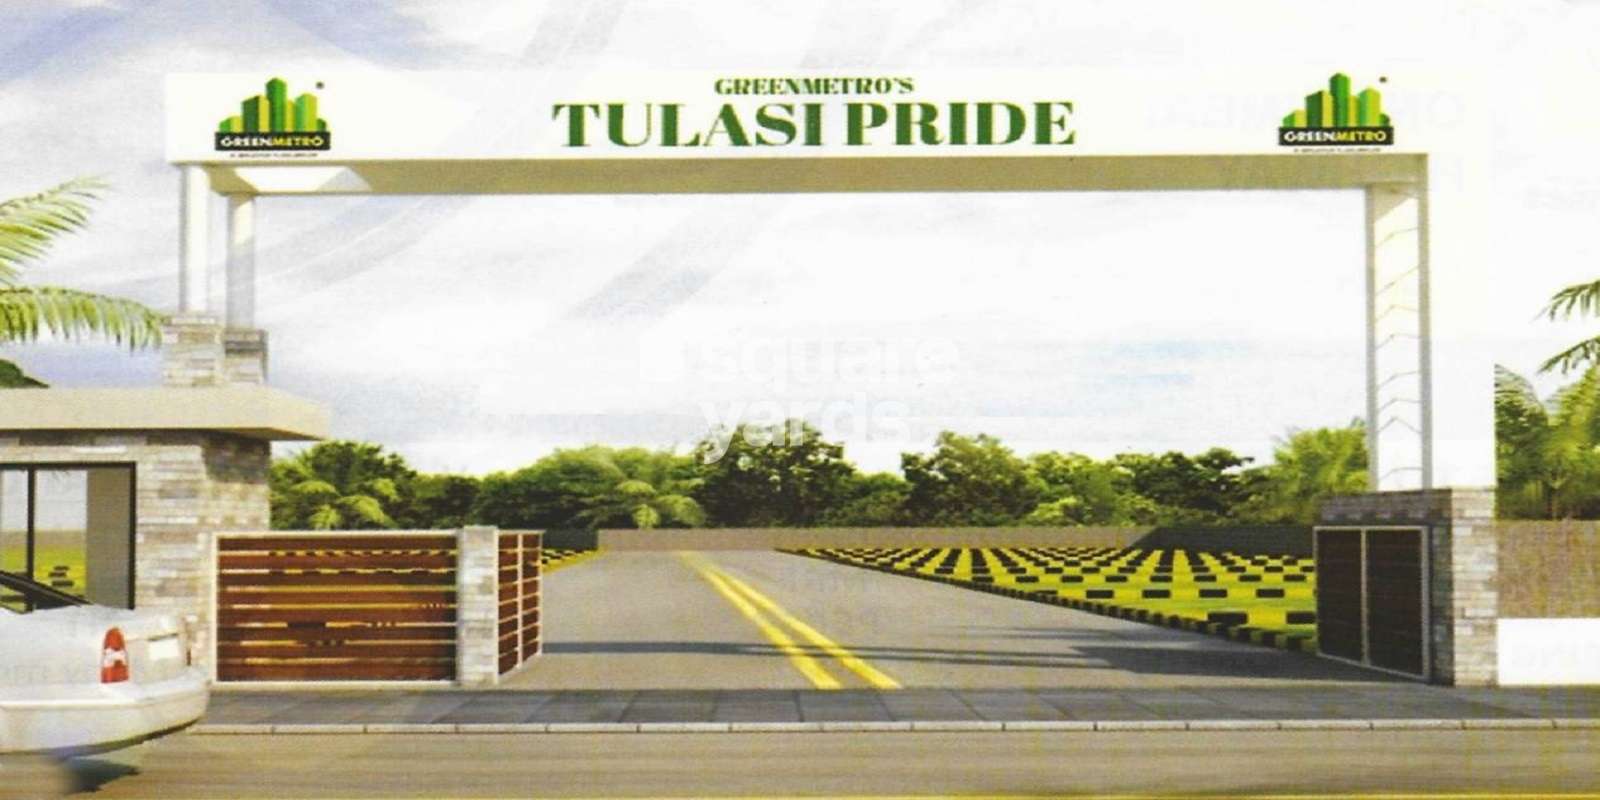 Greenmetros Tulasi Pride Cover Image